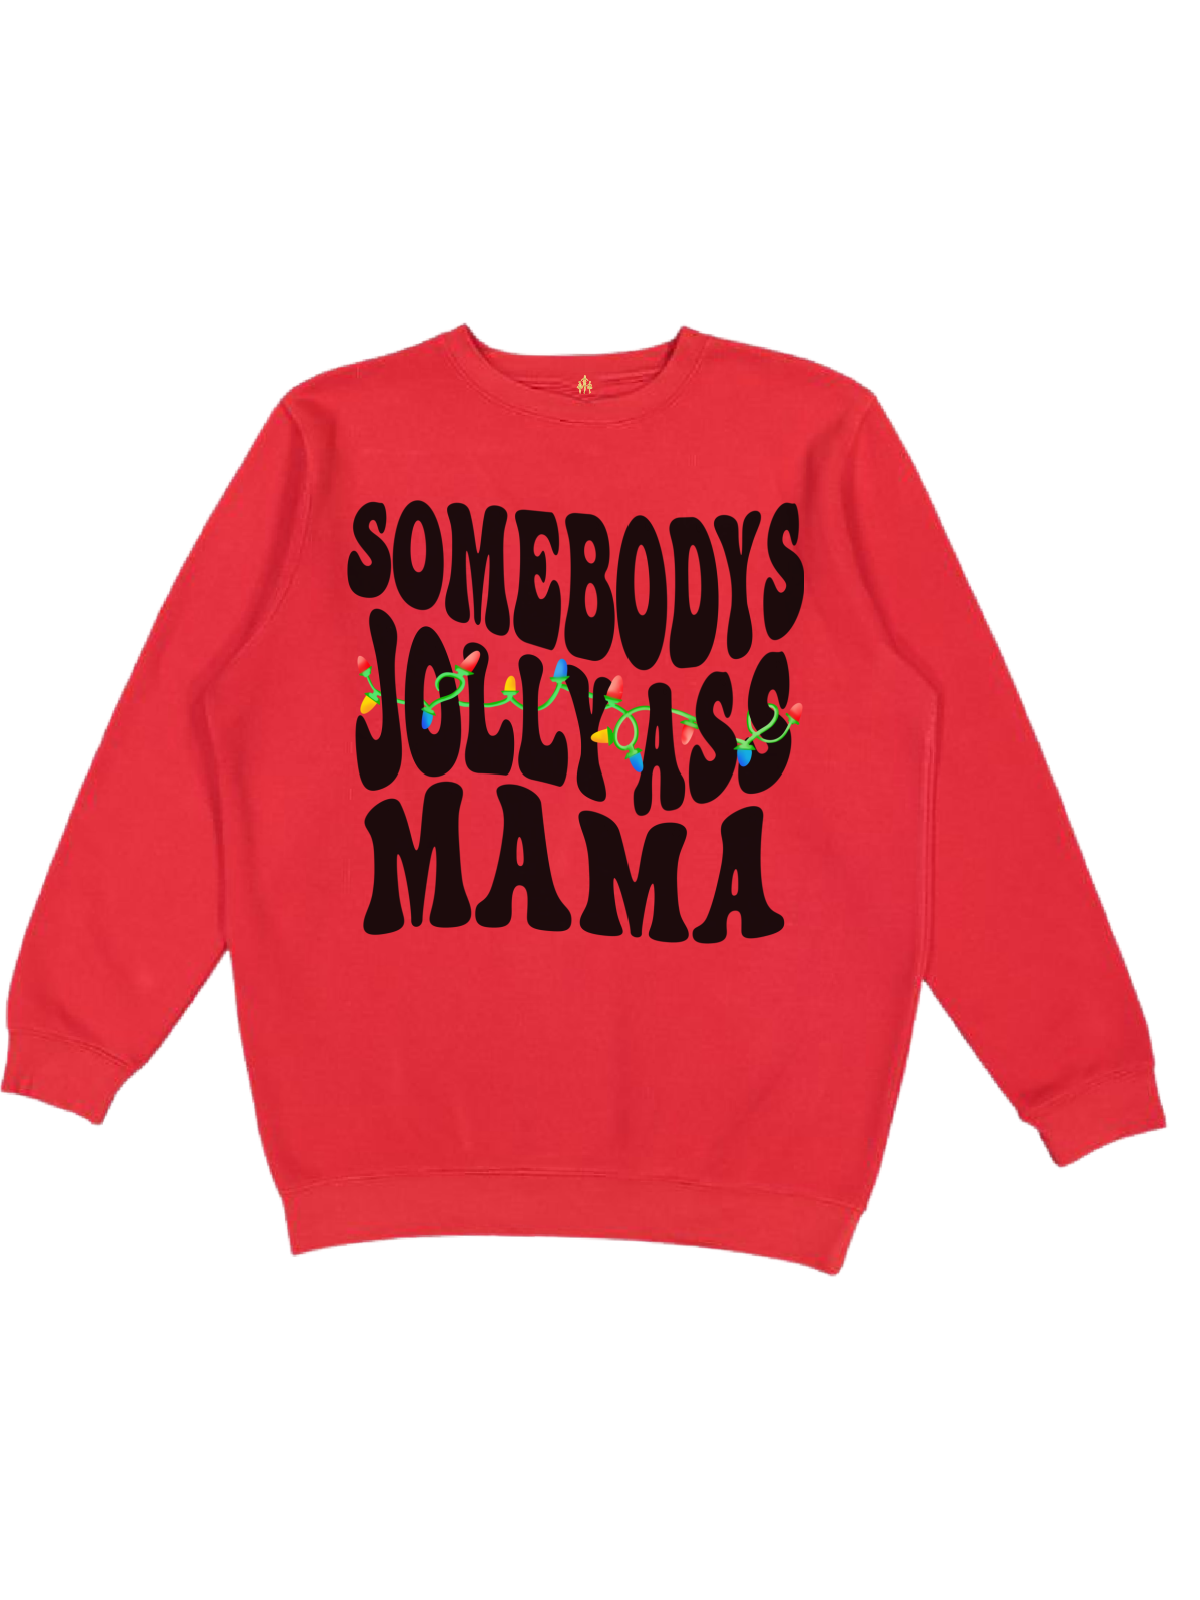 Somebodys Jolly Ass Mama Funny Christmas Sweatshirt